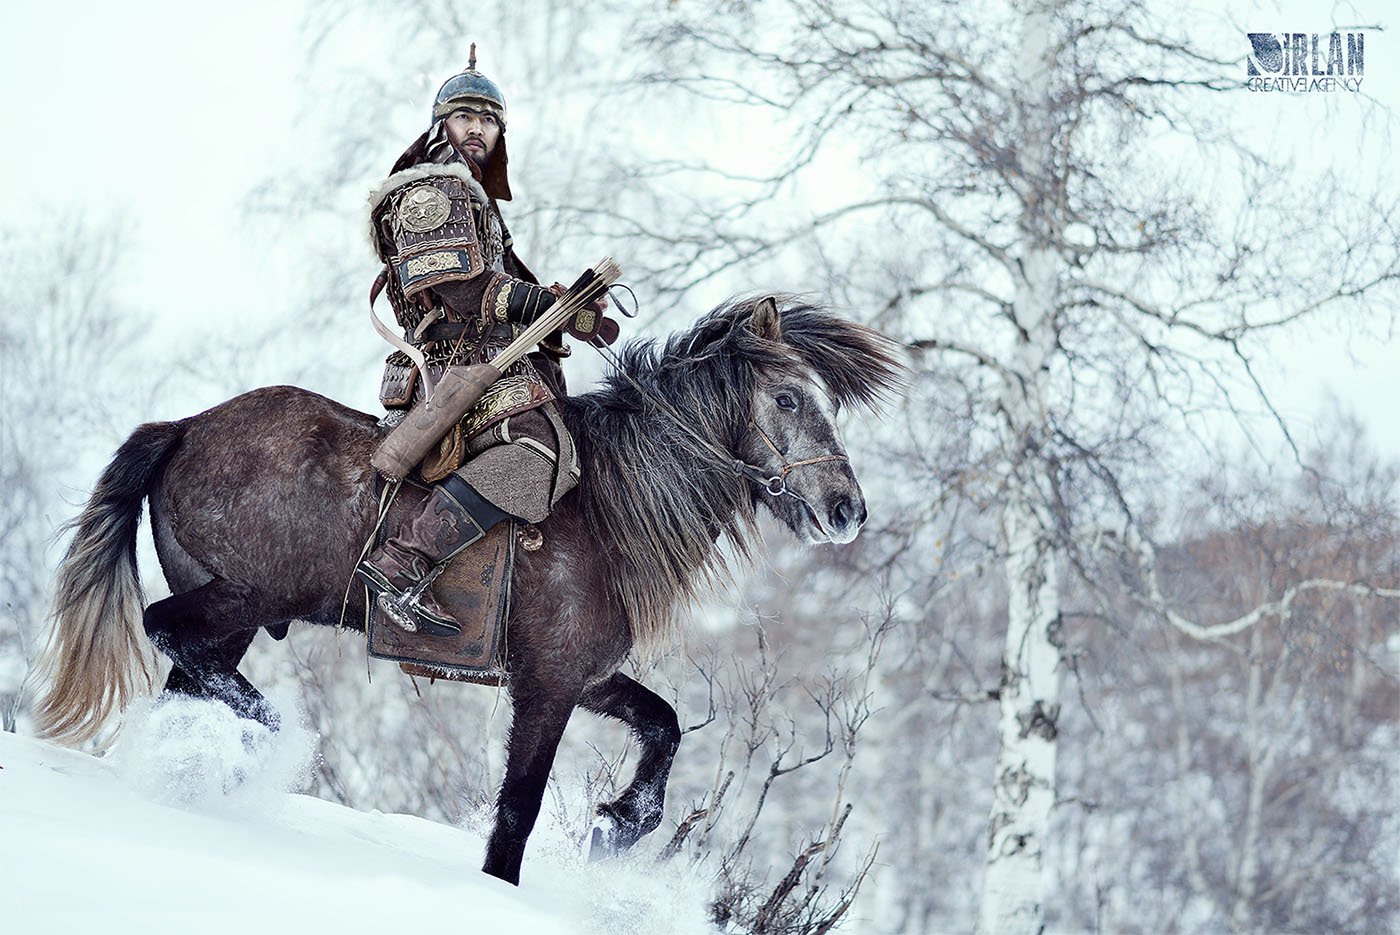 Arch, Archer, Brown, Forest, Helmet, Hero, Horse, Mongol, Mongolia, Mongolian, Snow, Sword, White, Winter, ganzorig miimaa